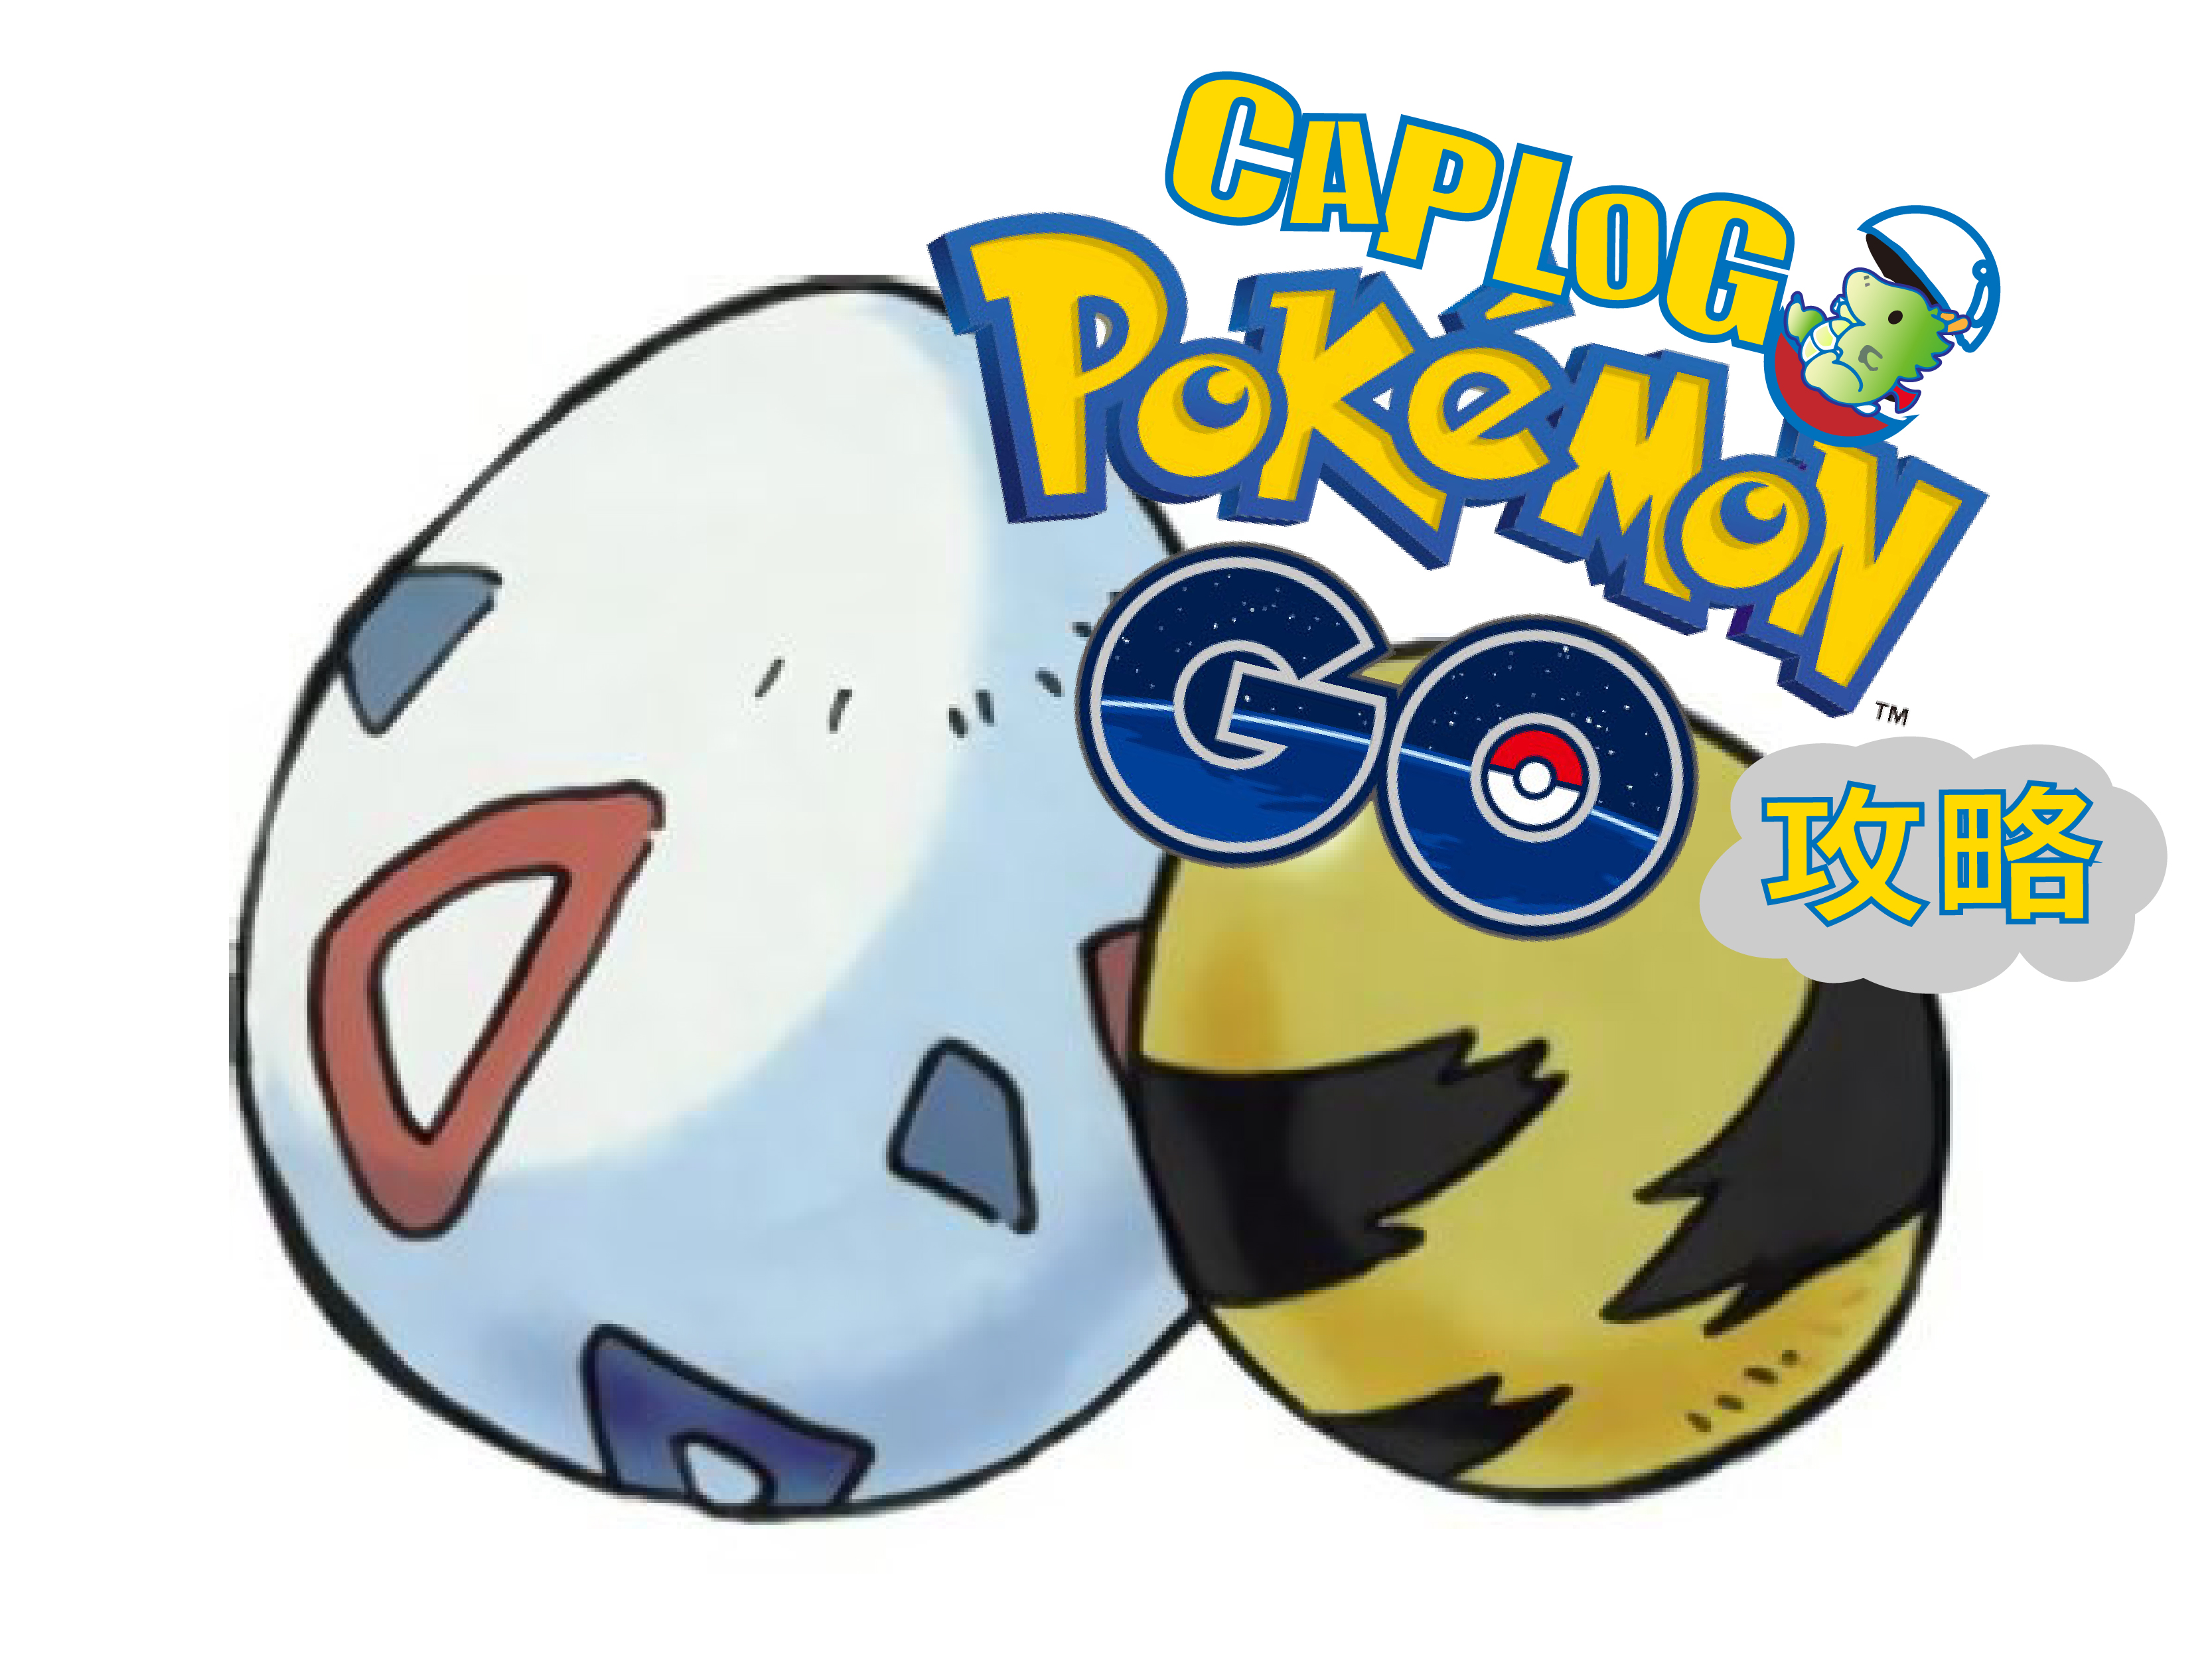 Pokemongo ポケモンgoで簡単に卵を孵化させる効率の良い方法 攻略 Caplog